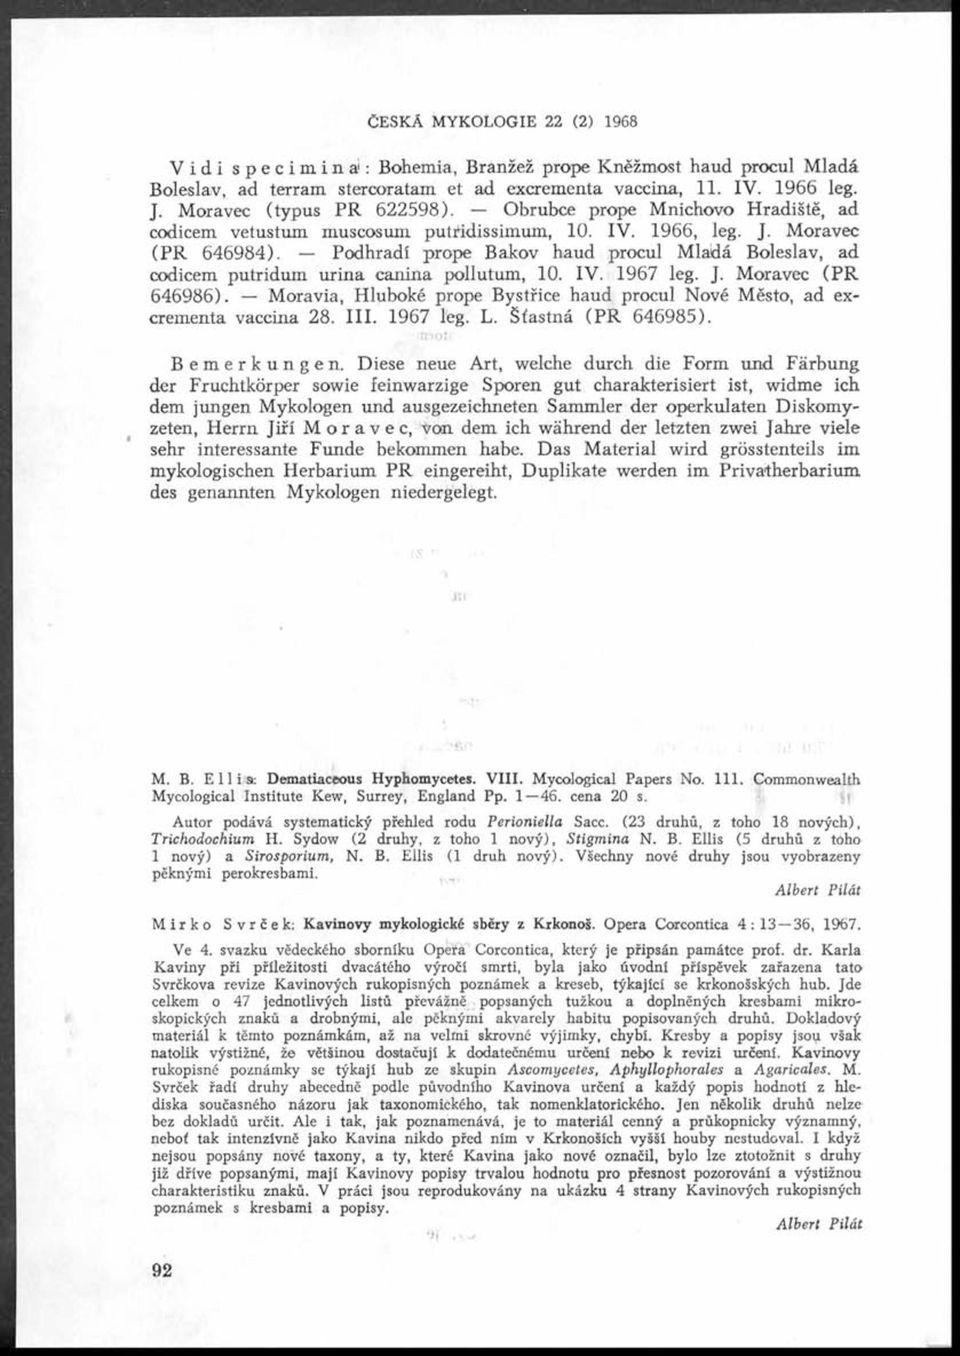 Podhradí prope Bakov haud procul Mladá Boleslav, ad codicem putridum urina canina pollutum, 10. V. 1967 leg. J. Moravec (P R 6 4 6 9 8 6 ).